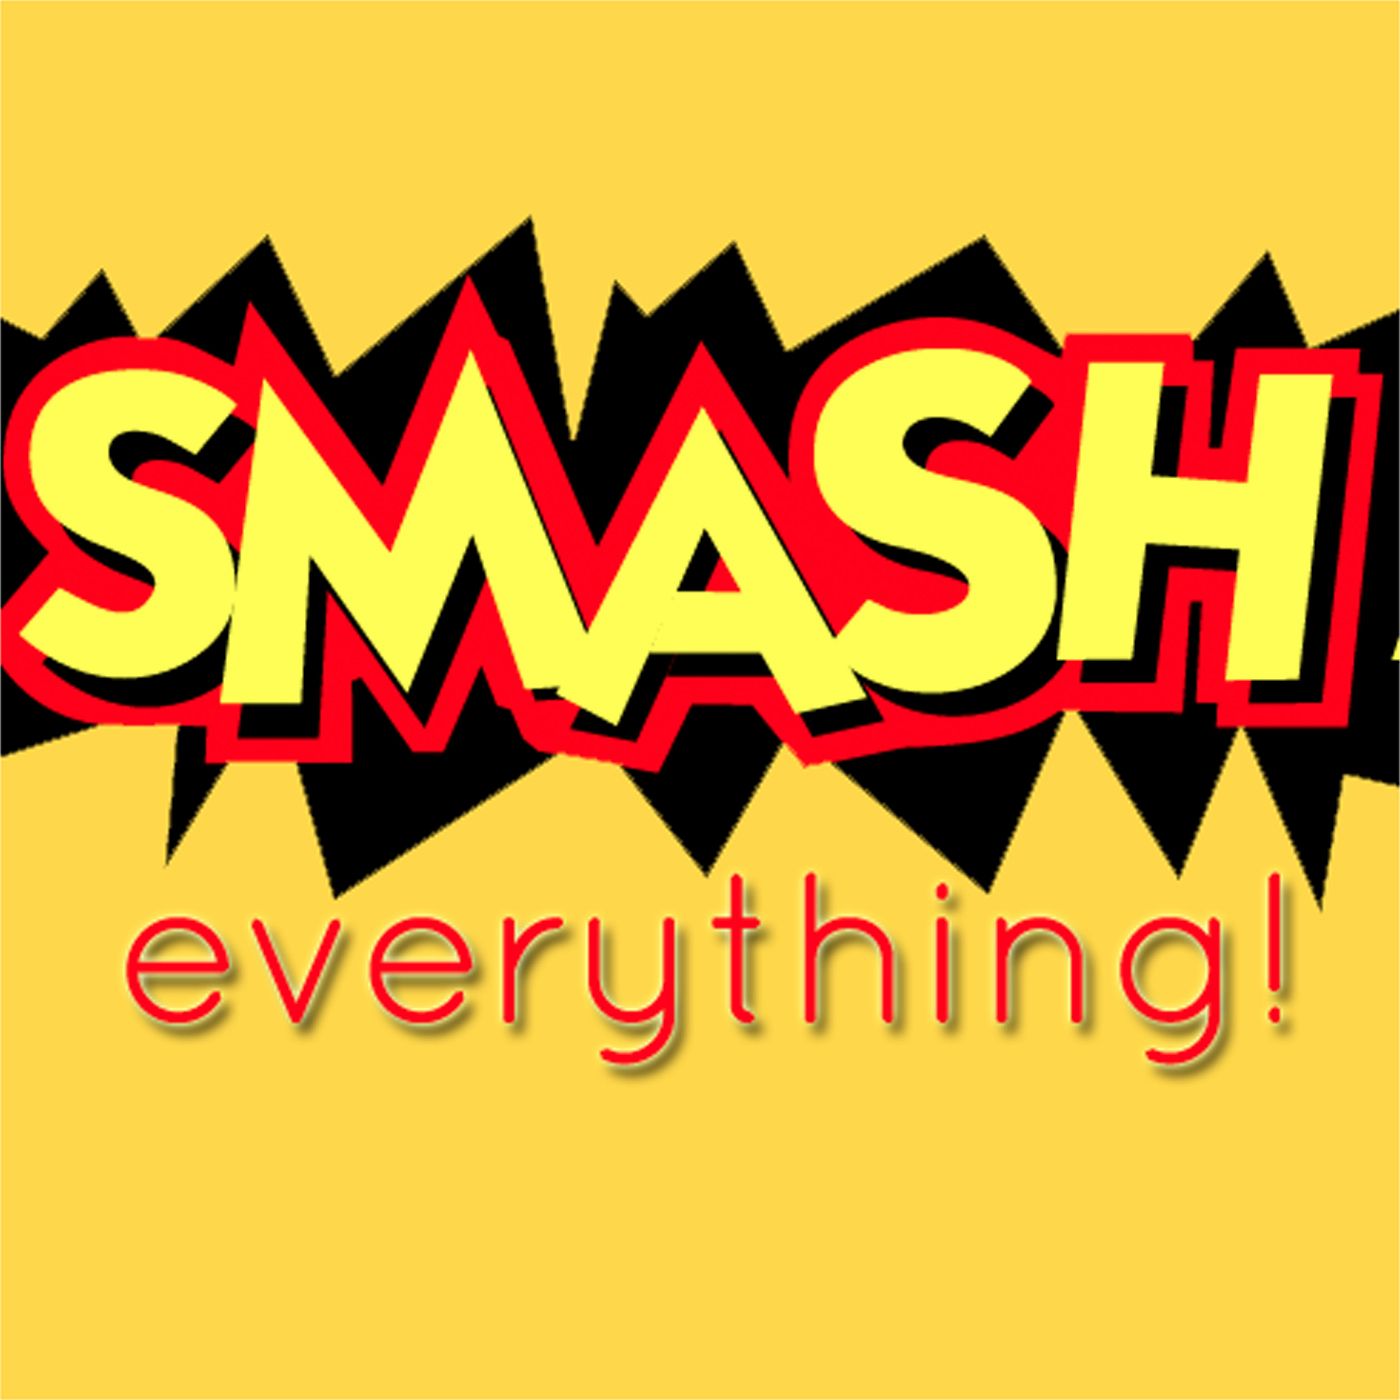 Smash Everything